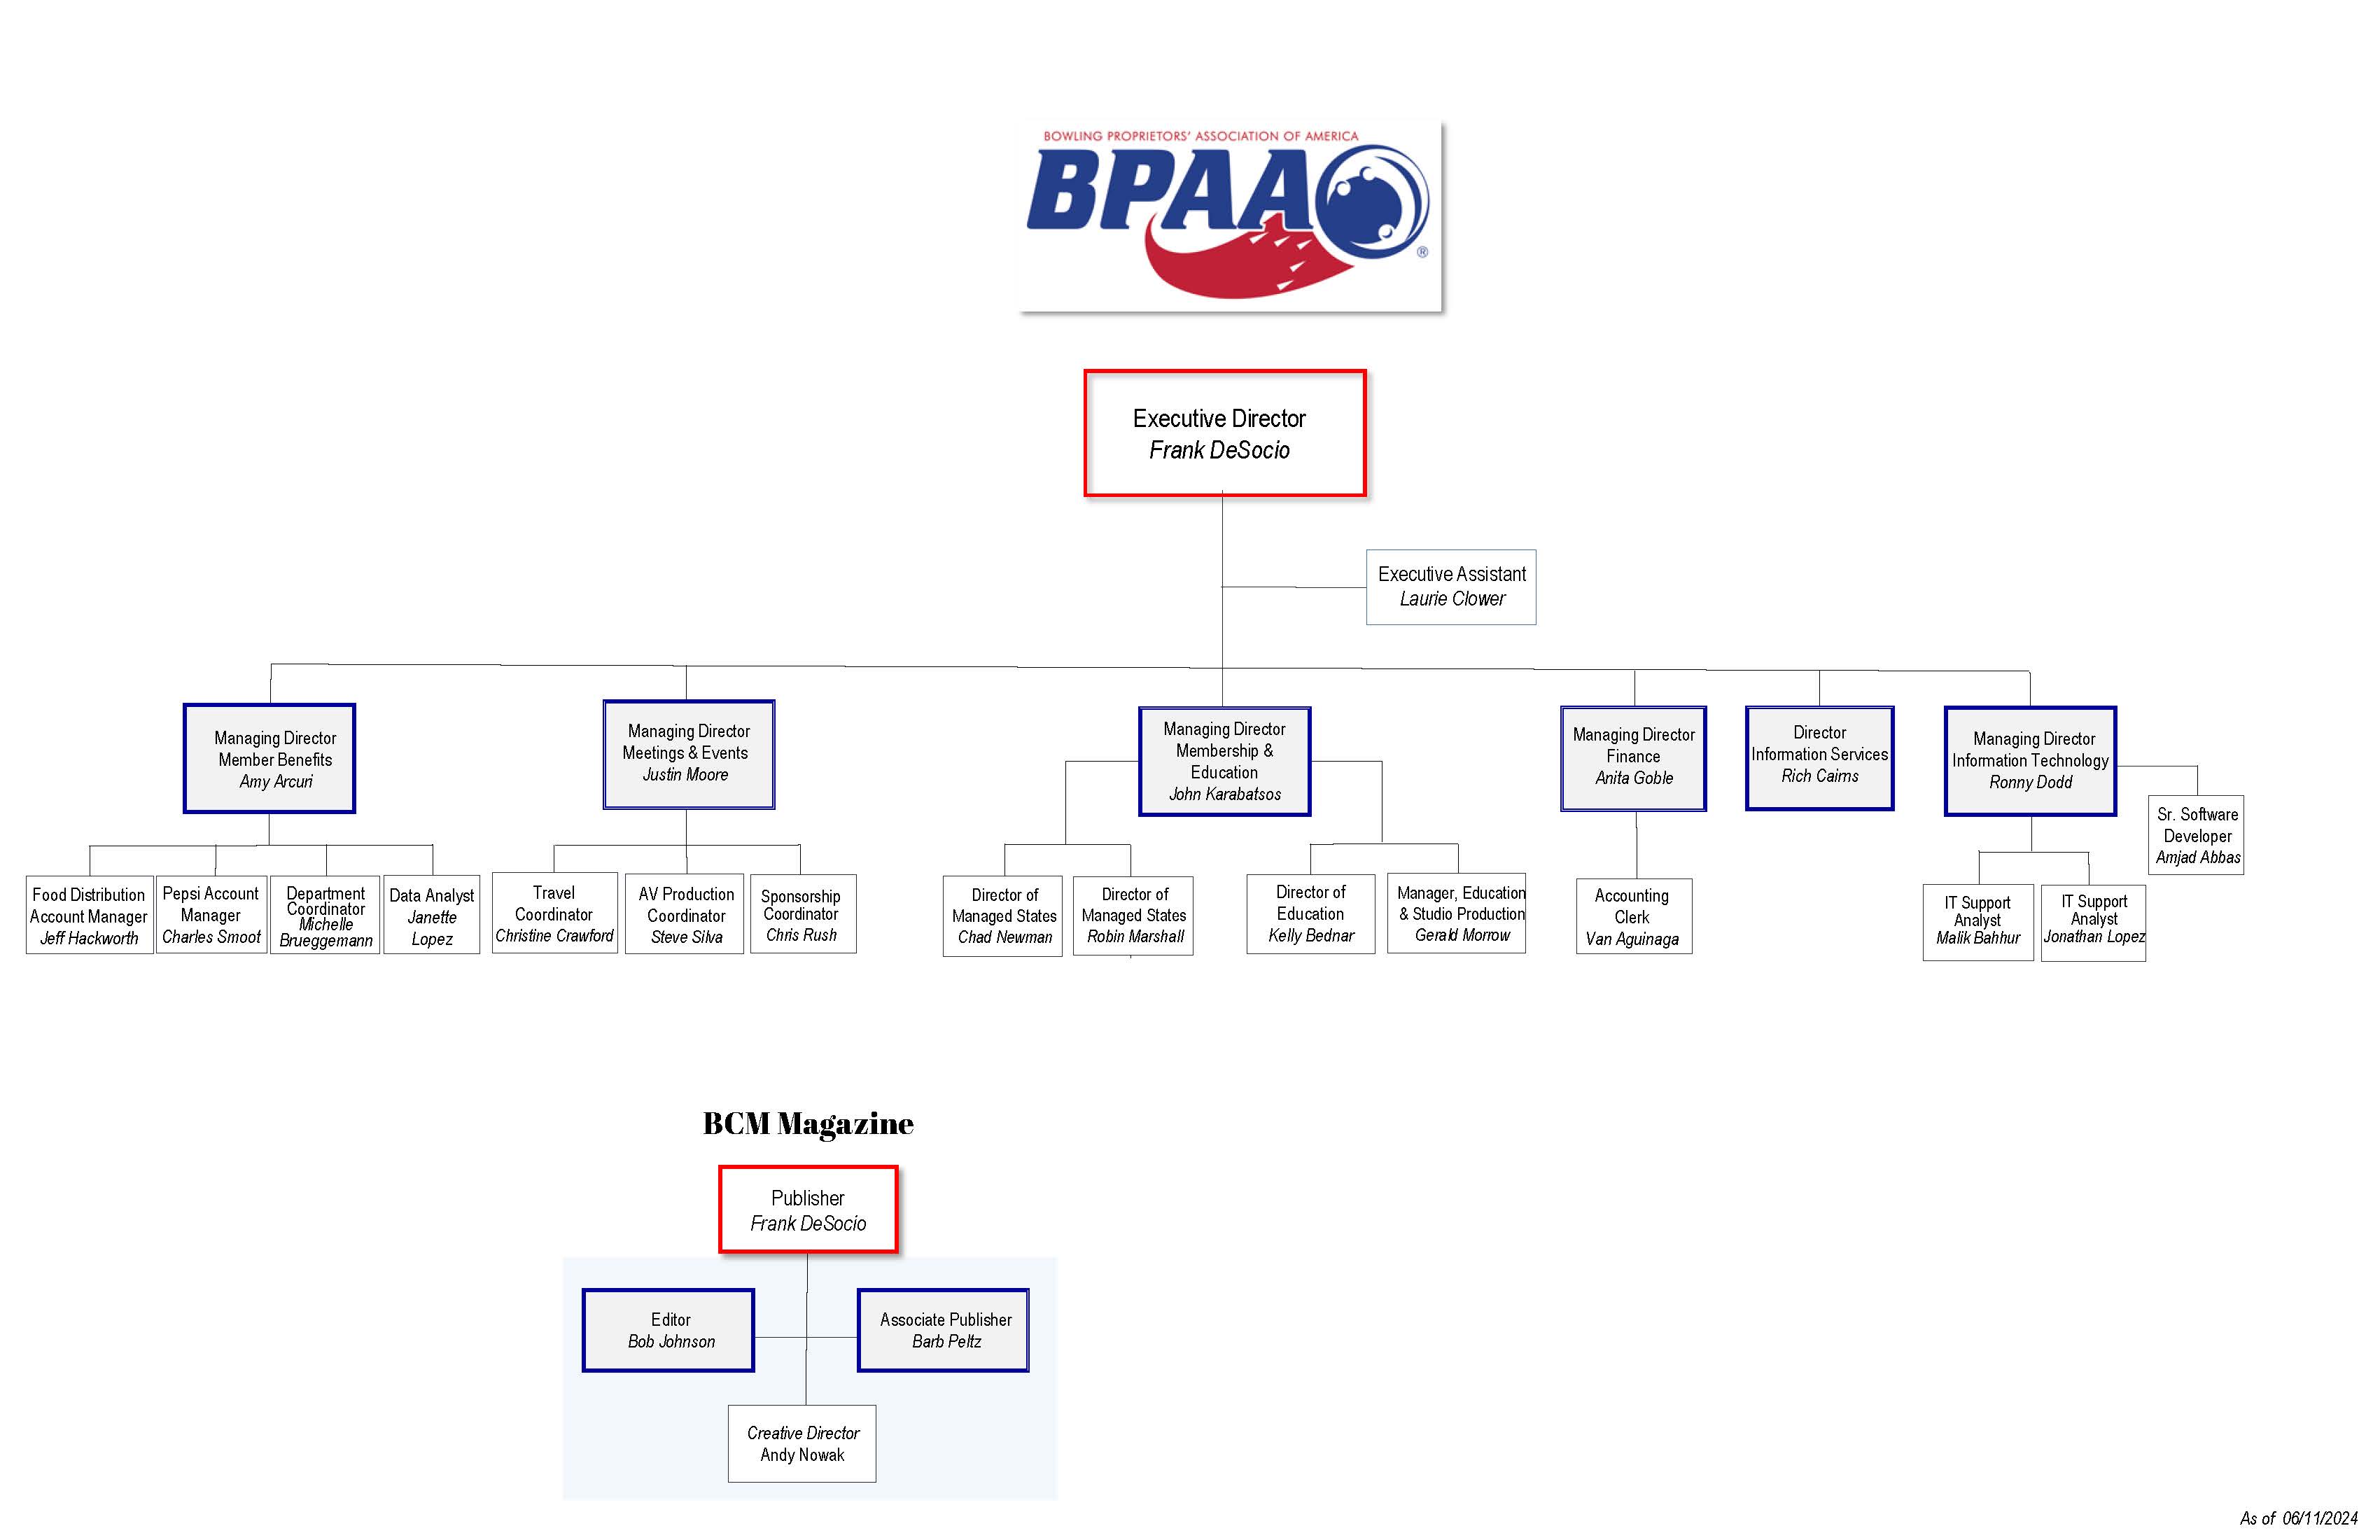 BPAA Organizational Chart